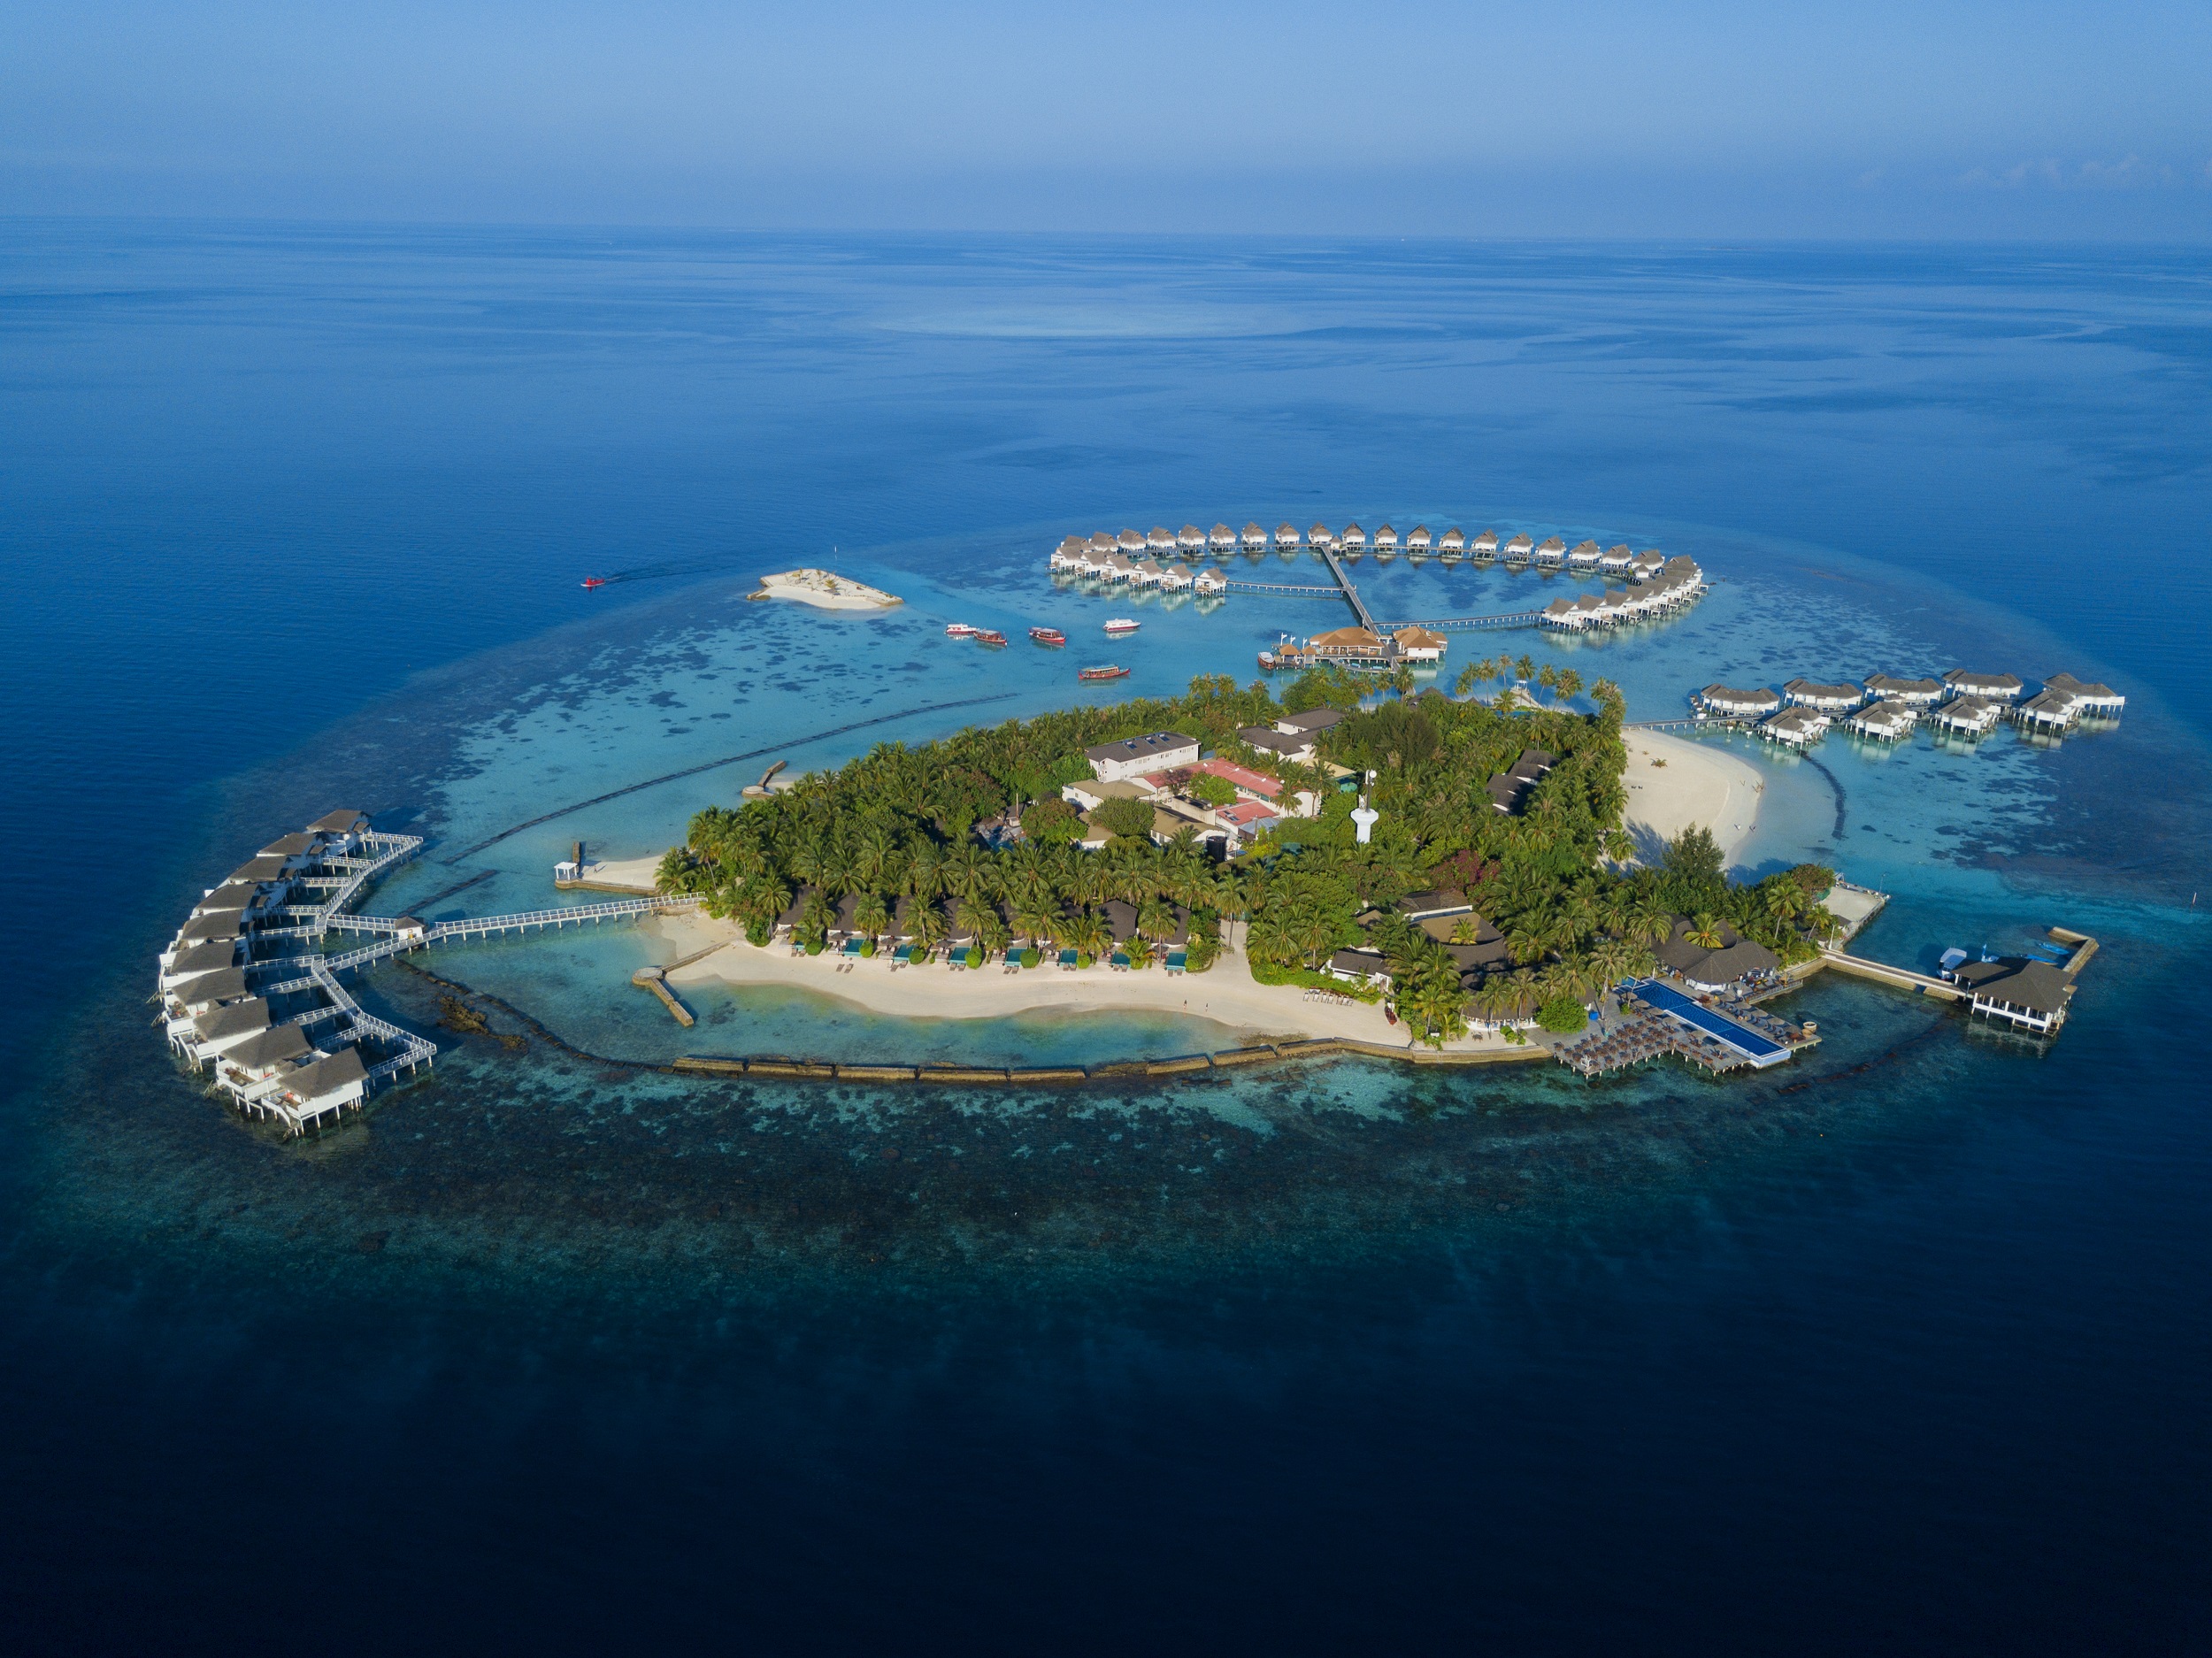 Centara grand island resort. Мальдивы Холидей Исланд Резорт. Centara Grand Island Resort Spa Maldives. Grand Centara Мальдивы Мальдивы отель. Ари Атолл Мальдивы.